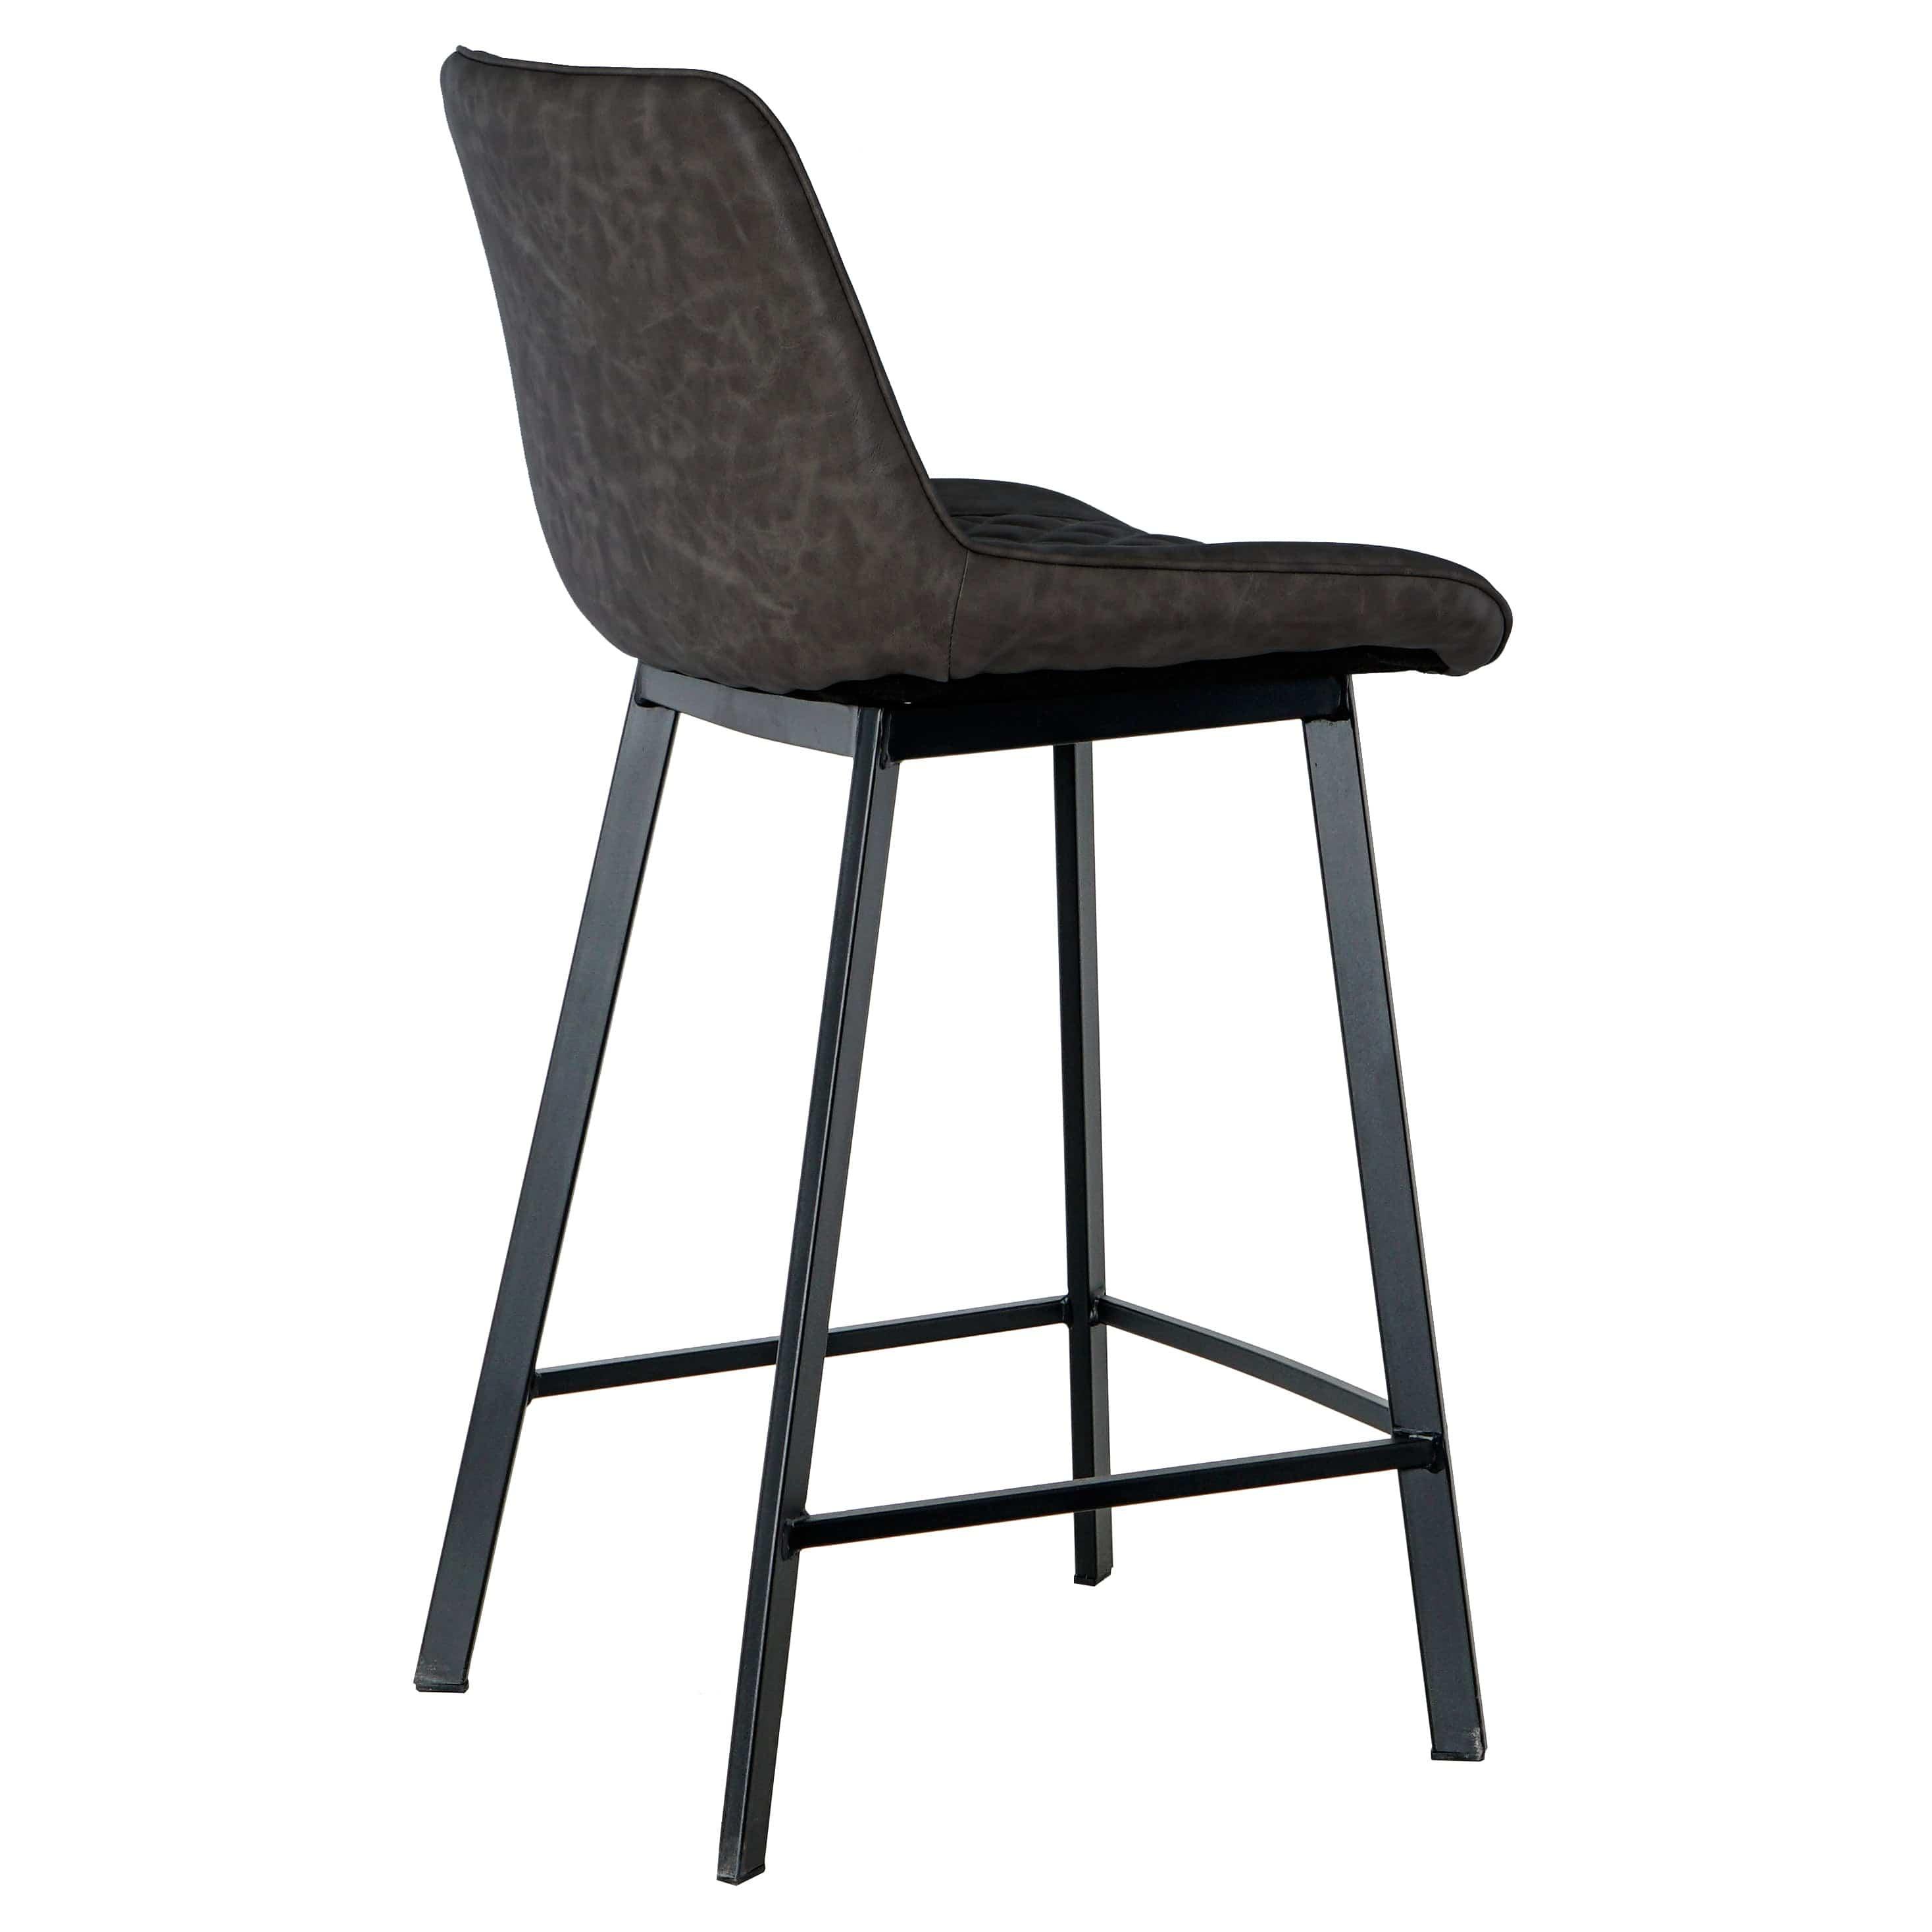 Shop High quality modern cheap high bar stool Upholstered soft dark brown pu Leather bar chair(set of 2) Mademoiselle Home Decor